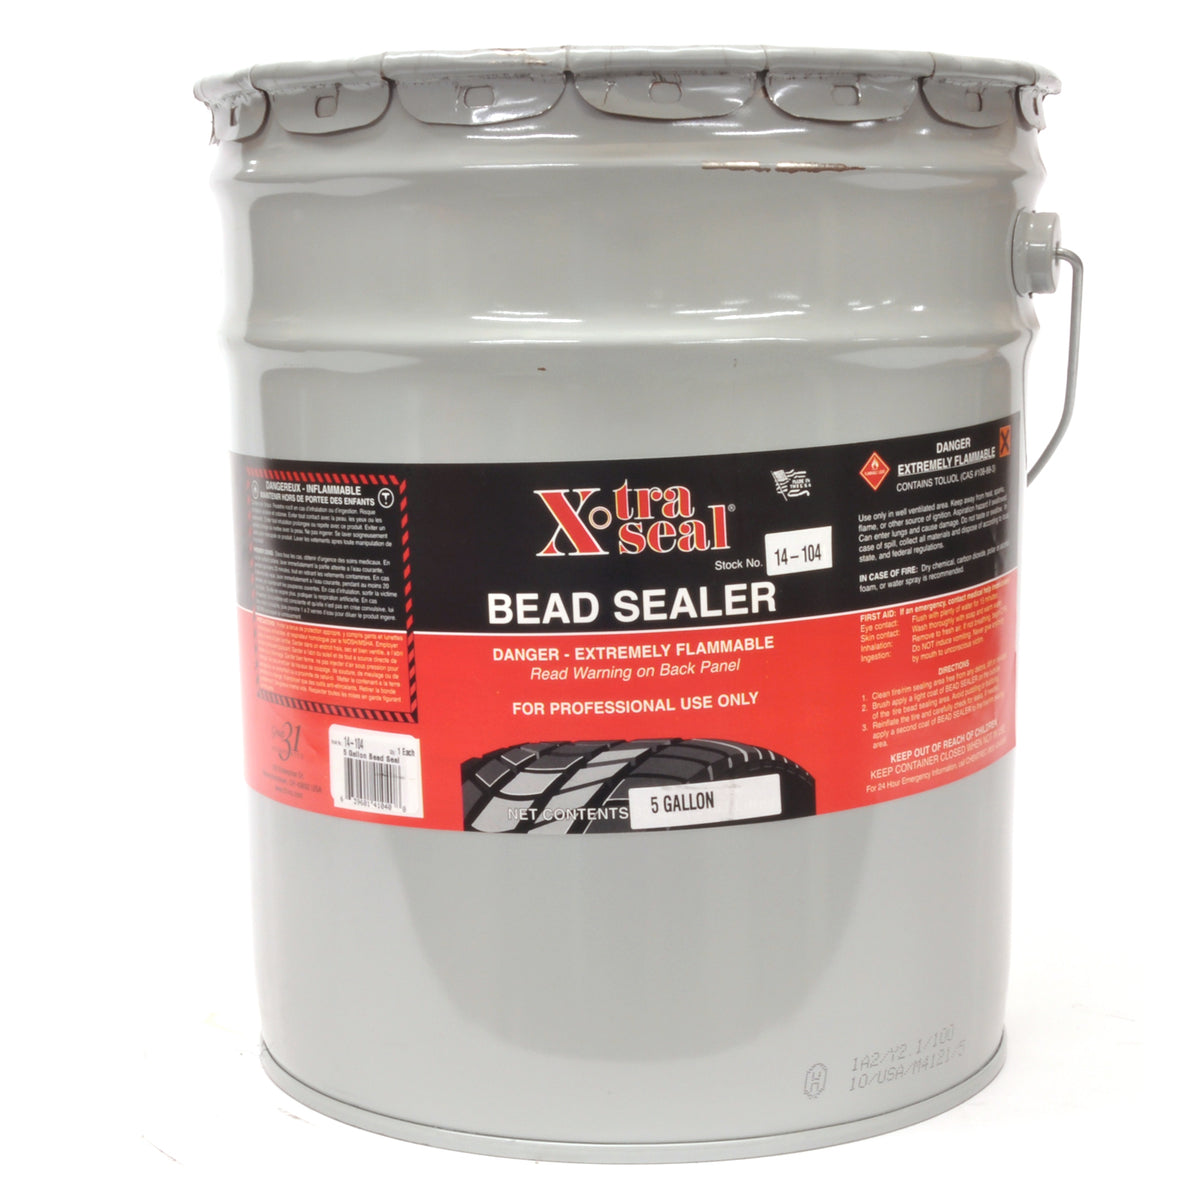 Xtra Seal 14-101 Tire Bead & Rim Sealer 32 oz - auto wheels